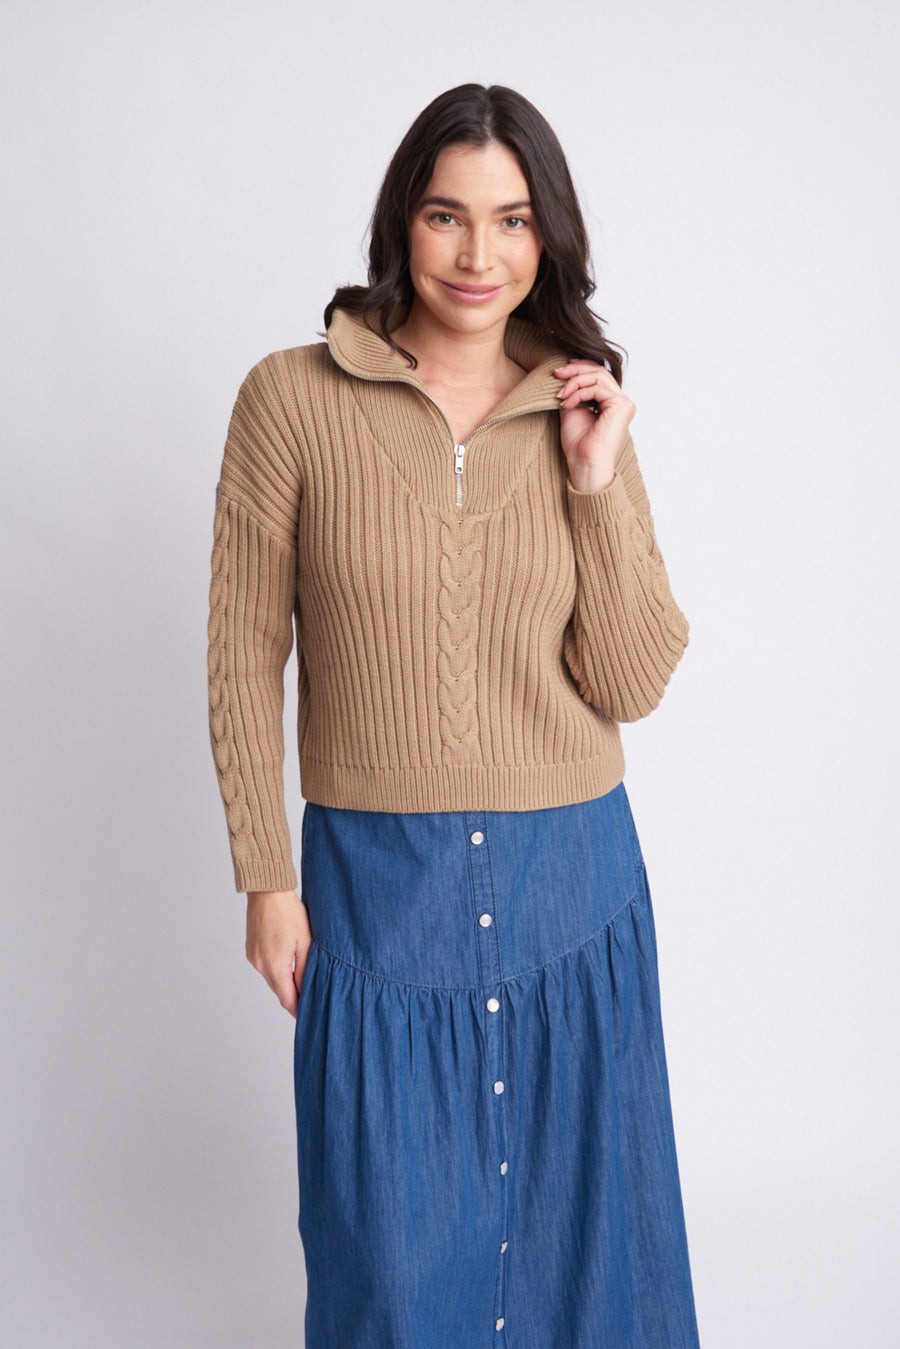 Cloth + Paper + Scissors - Cable 1/2 Zip Sweater - Sahara